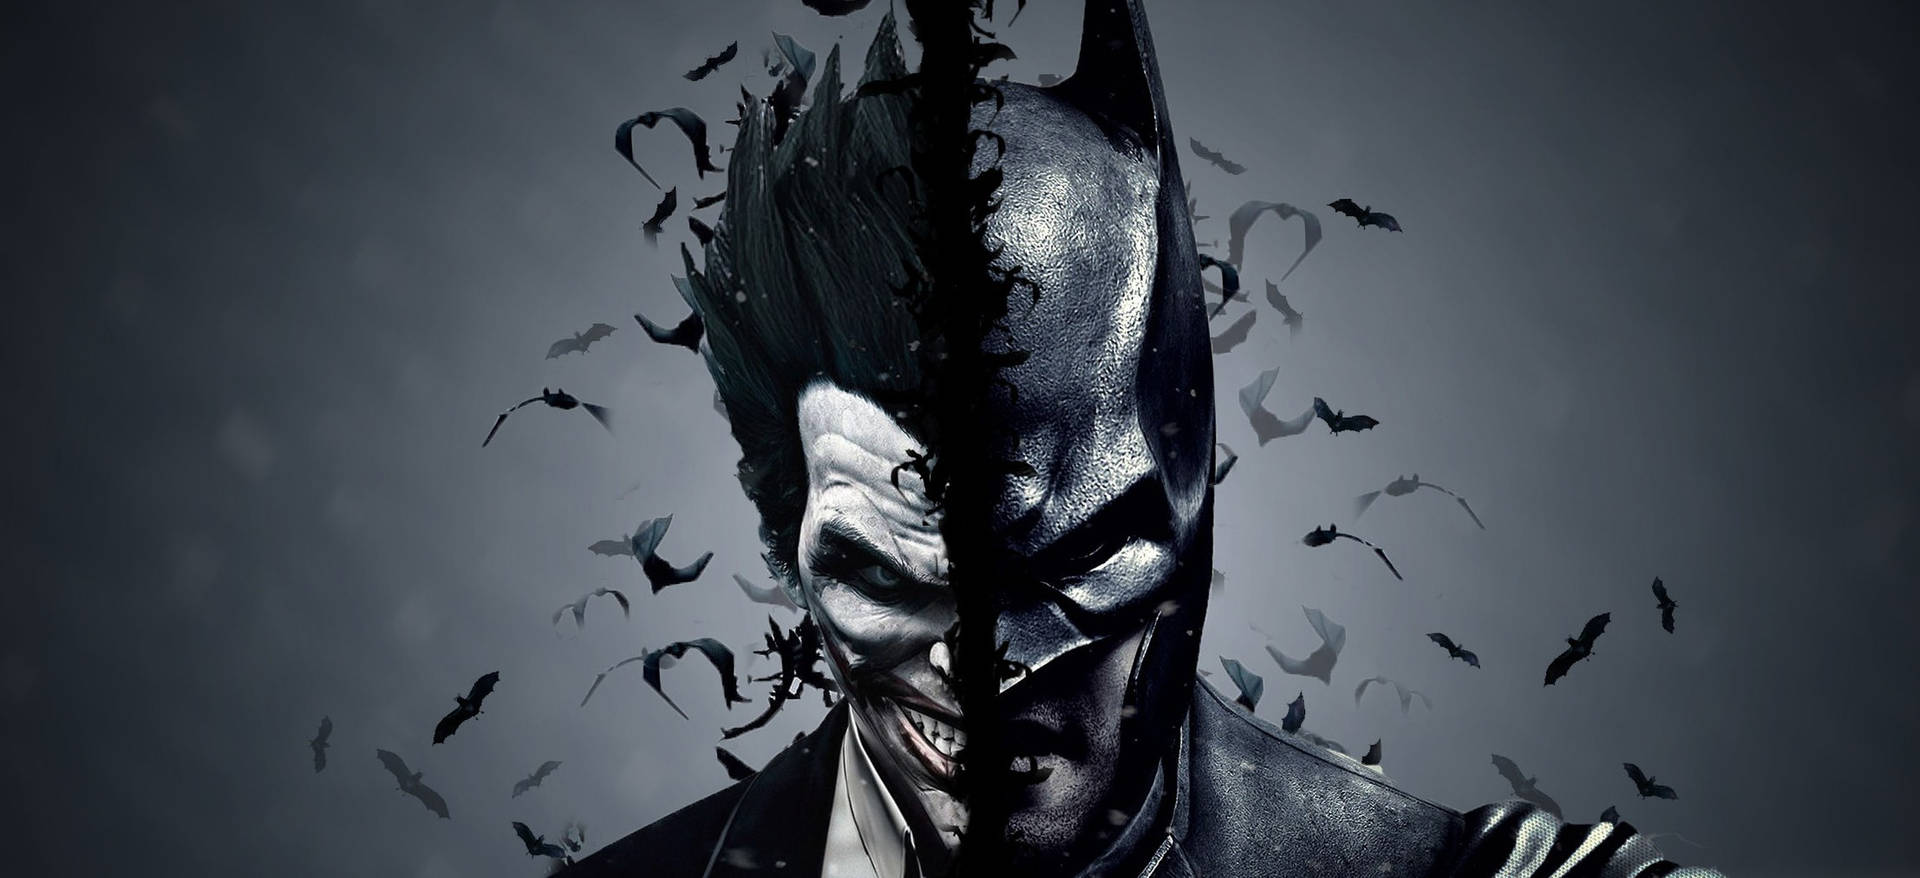 Download Cool Picture Joker And Batman Wallpaper